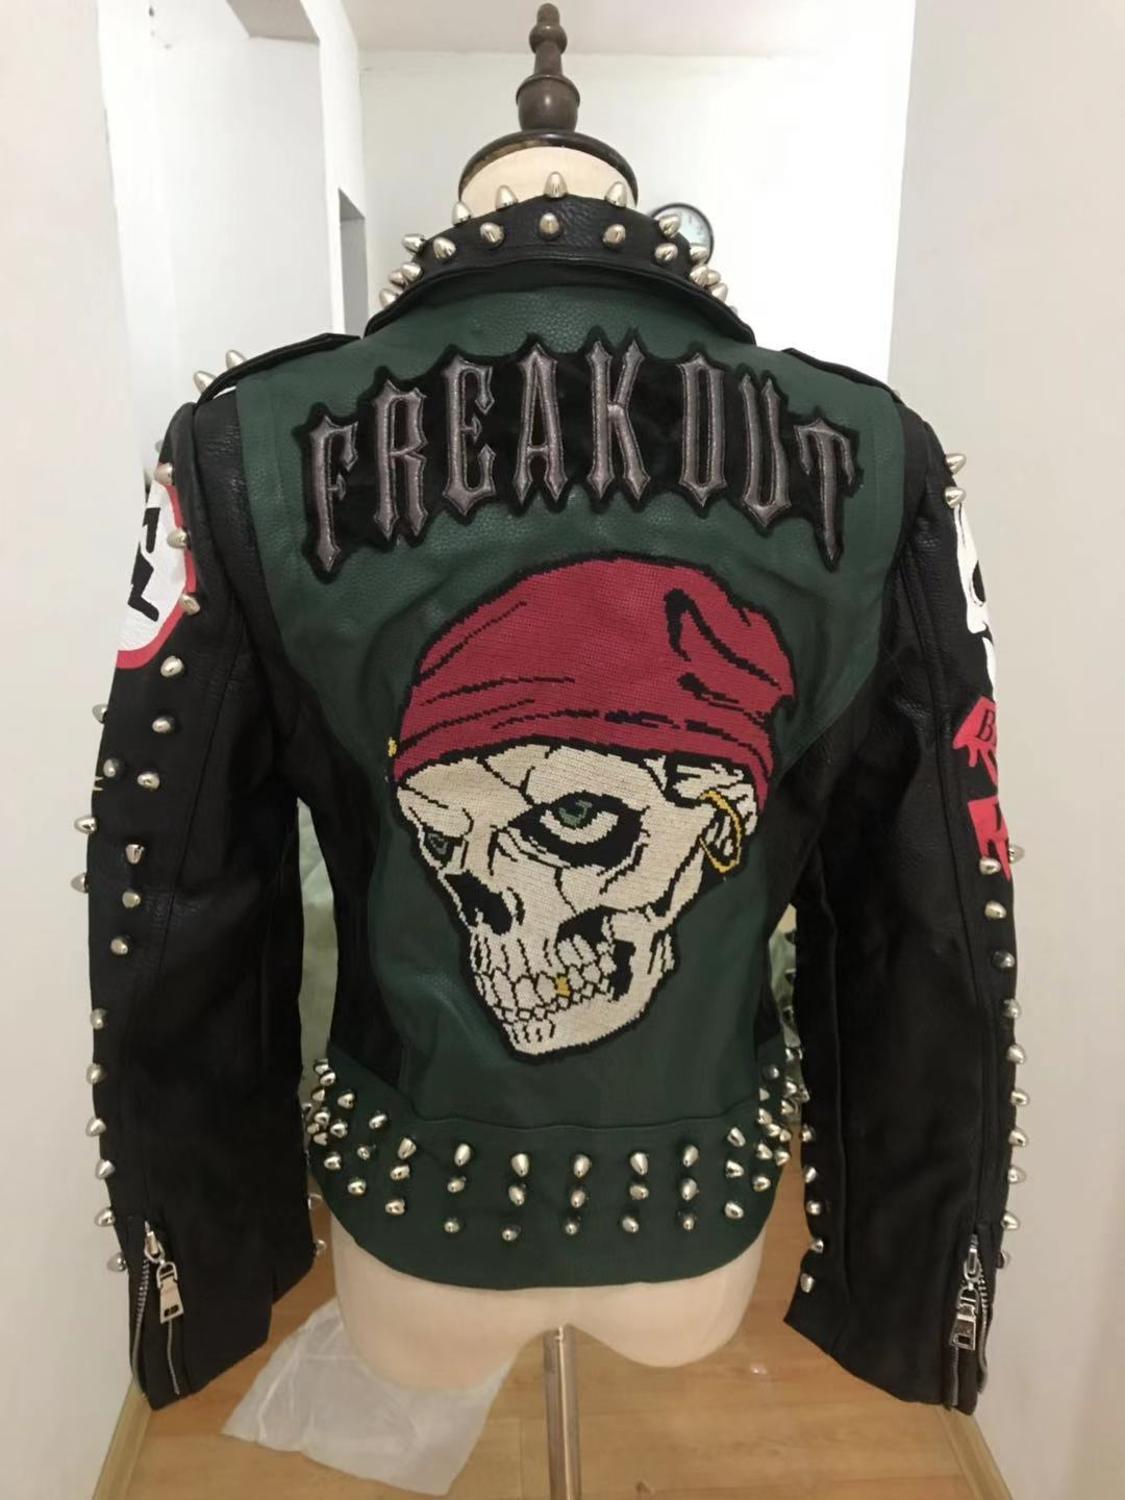 Freak Out Faux Leather Moto Jacket - ODDSALTBoutique